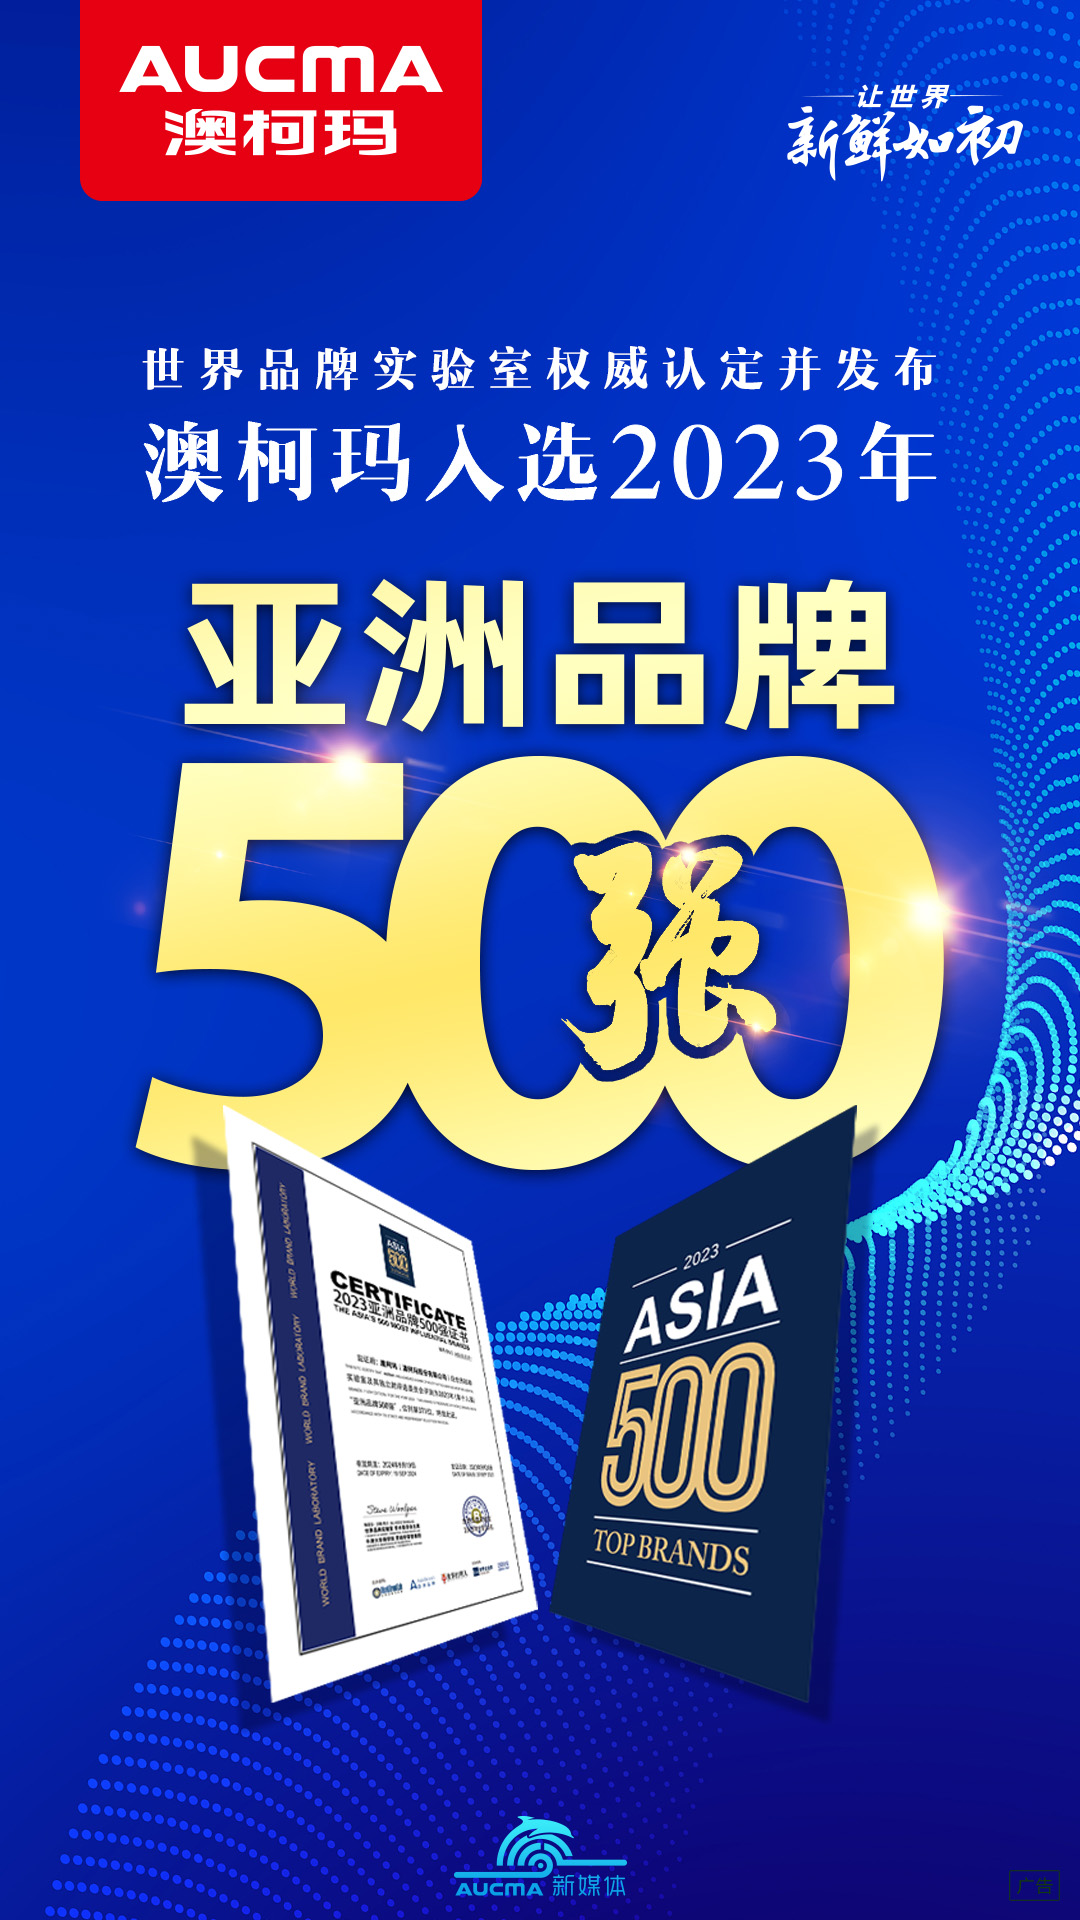 H5-2023亞洲品牌500強.jpg